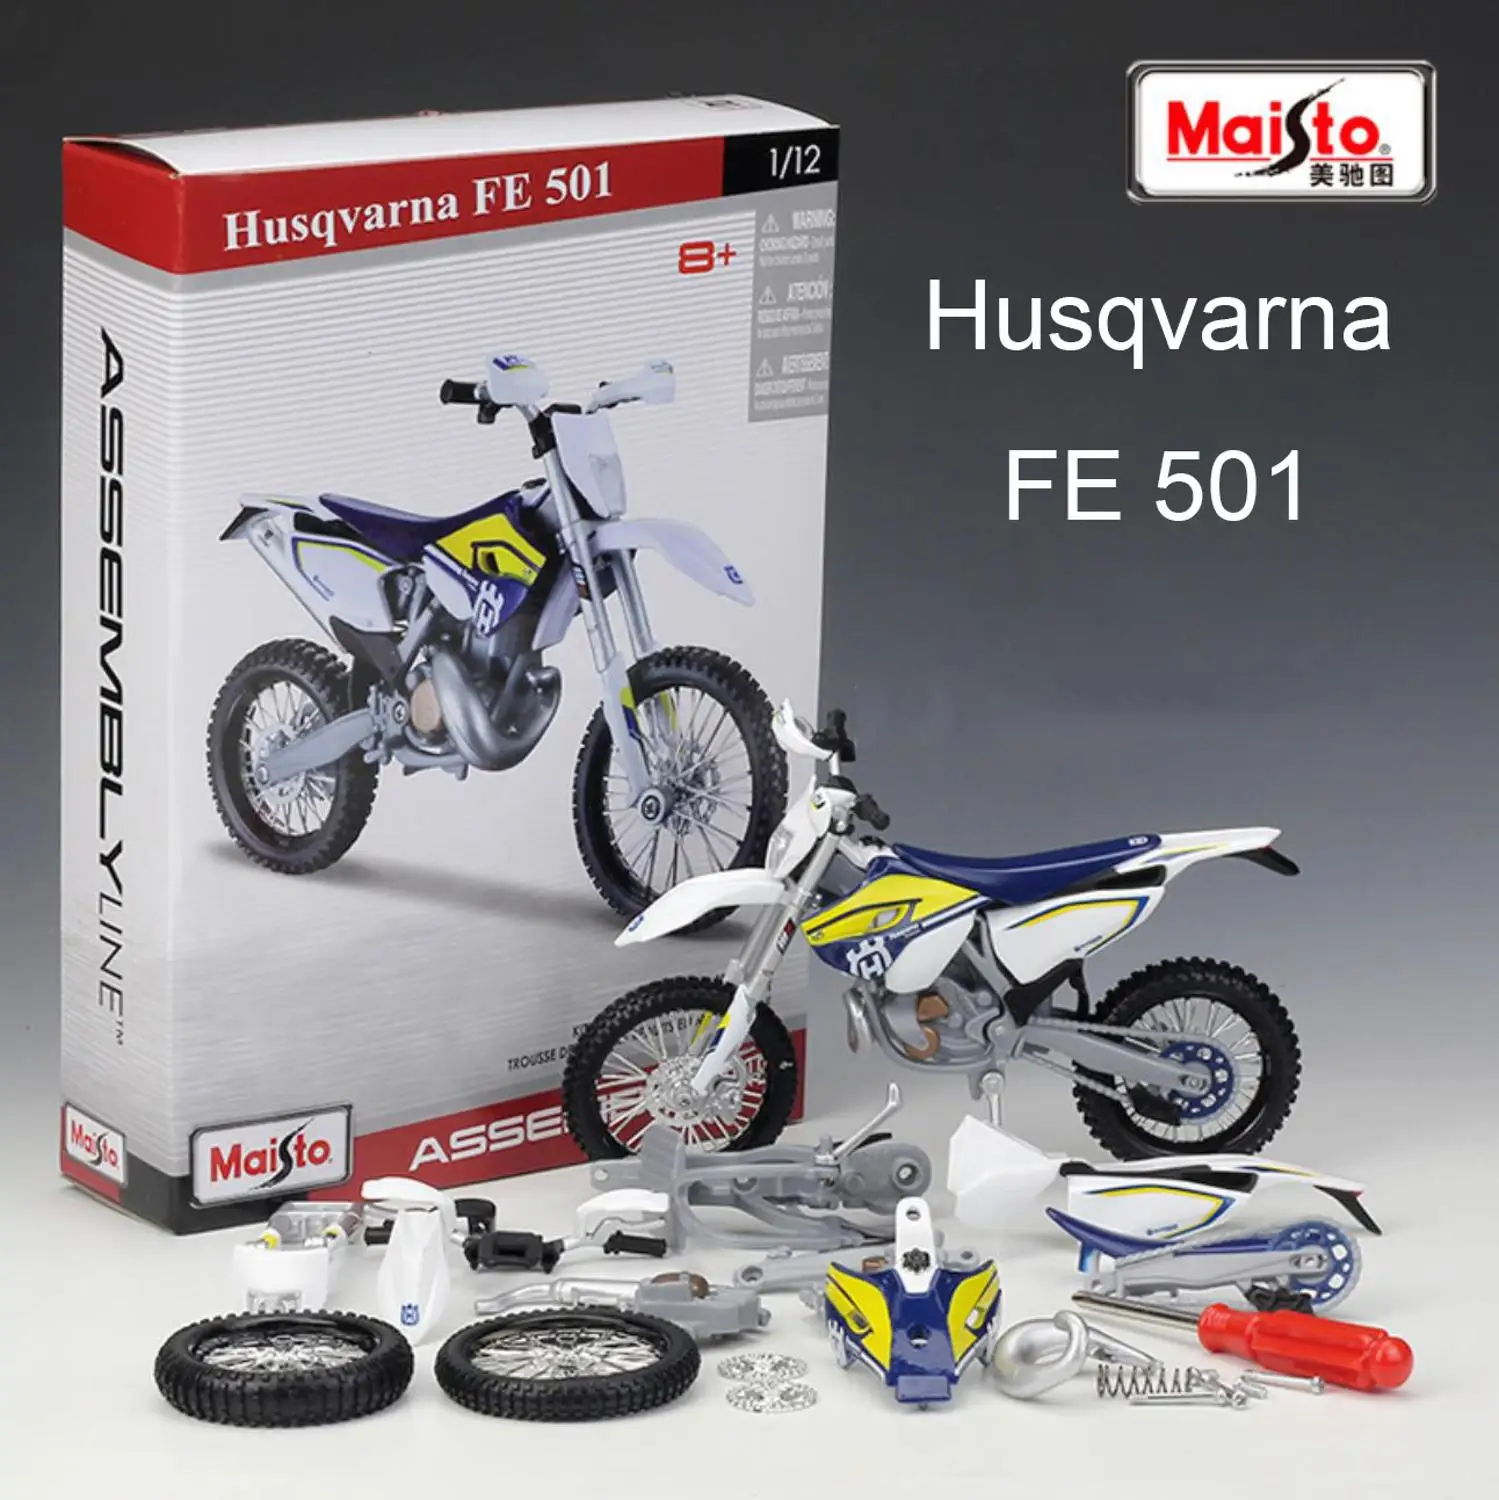 Maisto Husqvarna FE 501 Motorcycle Model Diecast 1:12 Scale Off-road Motor Toys 